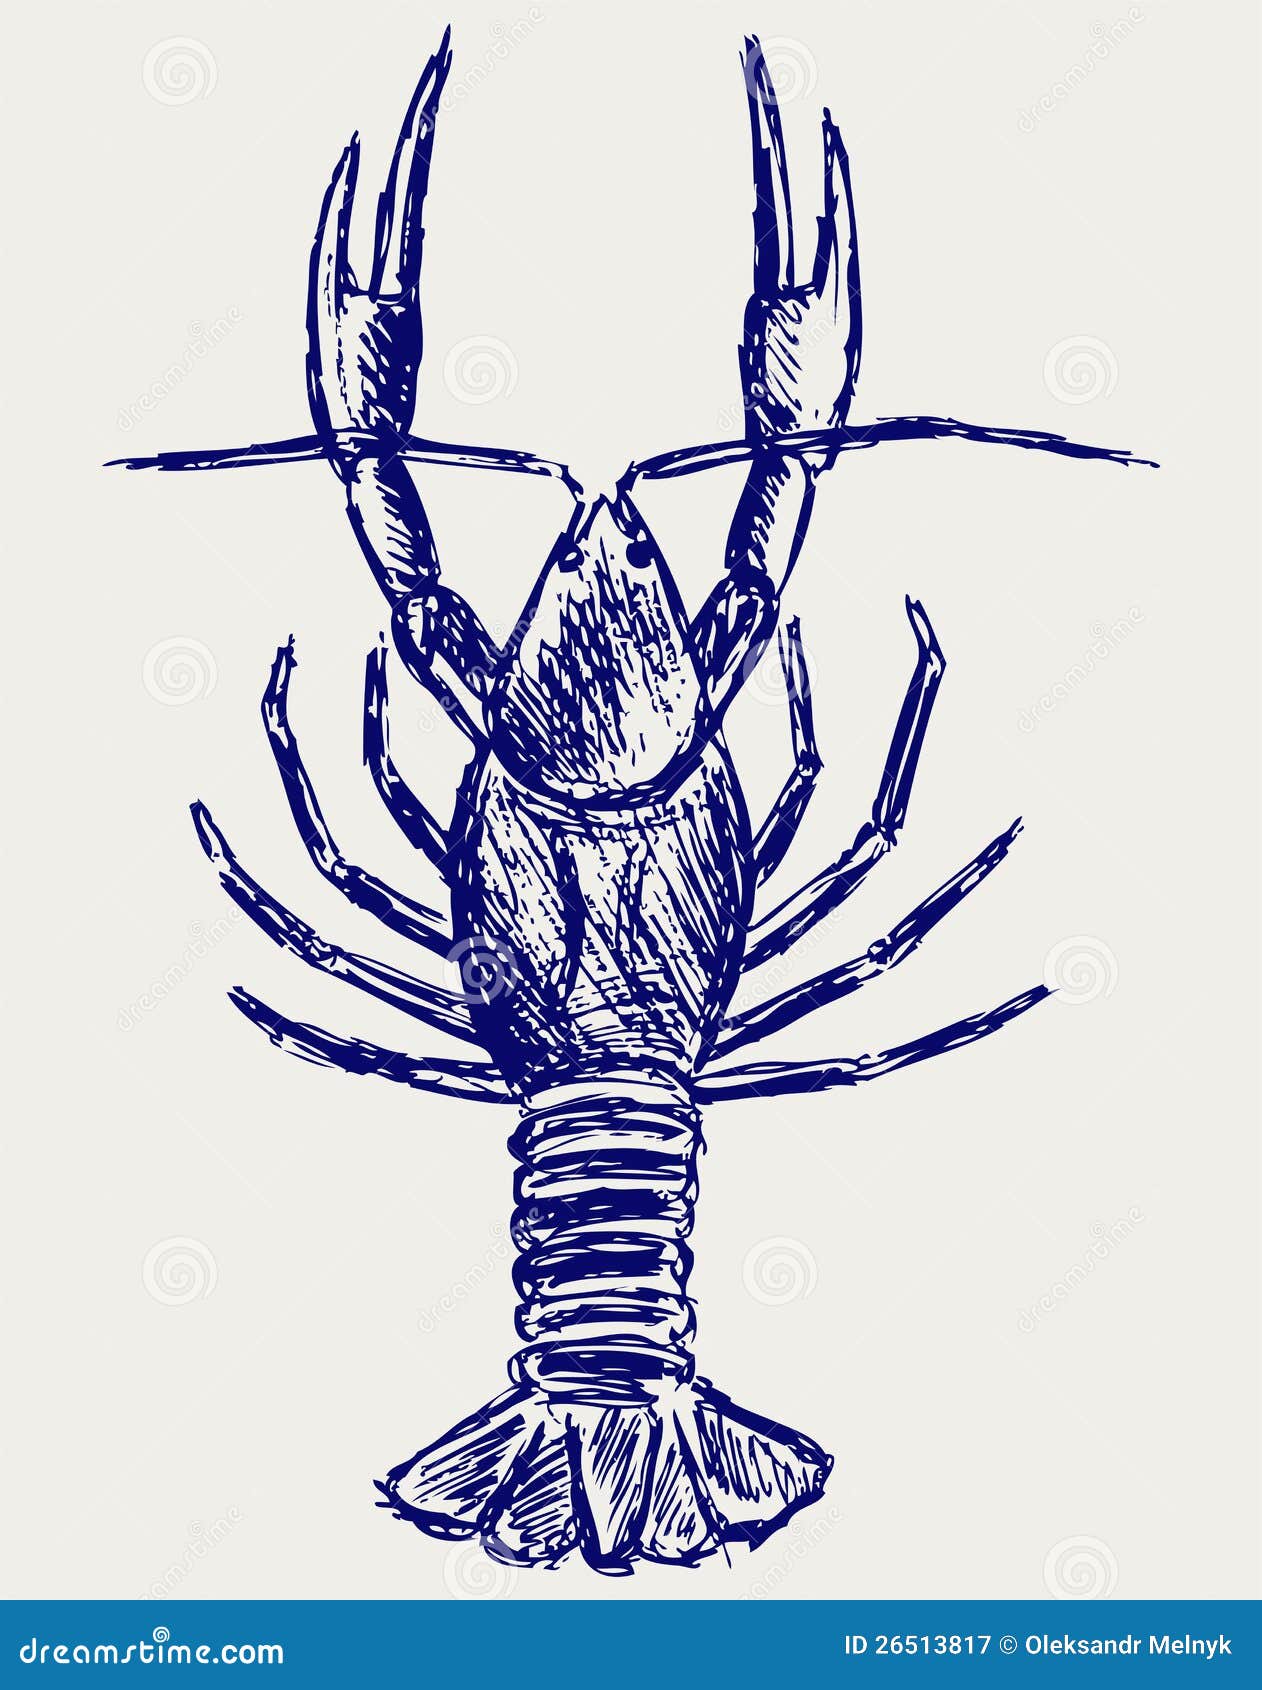 Crayfish sketch stock vector. Illustration of grunge - 26513817